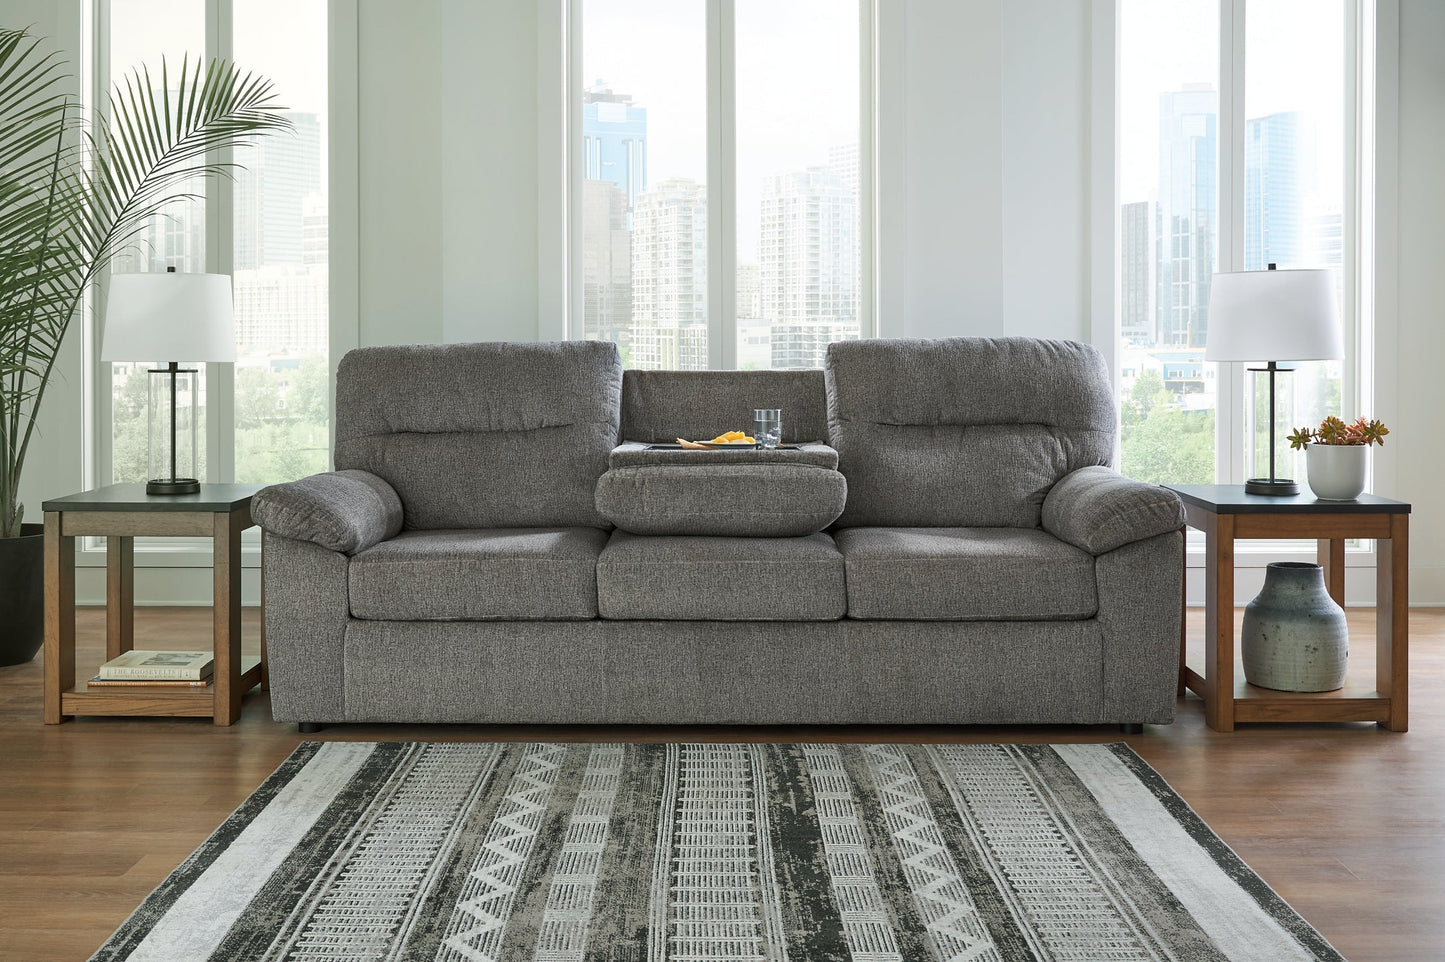 Bindura Sofa with Drop Down Table at Towne & Country Furniture (AL) furniture, home furniture, home decor, sofa, bedding